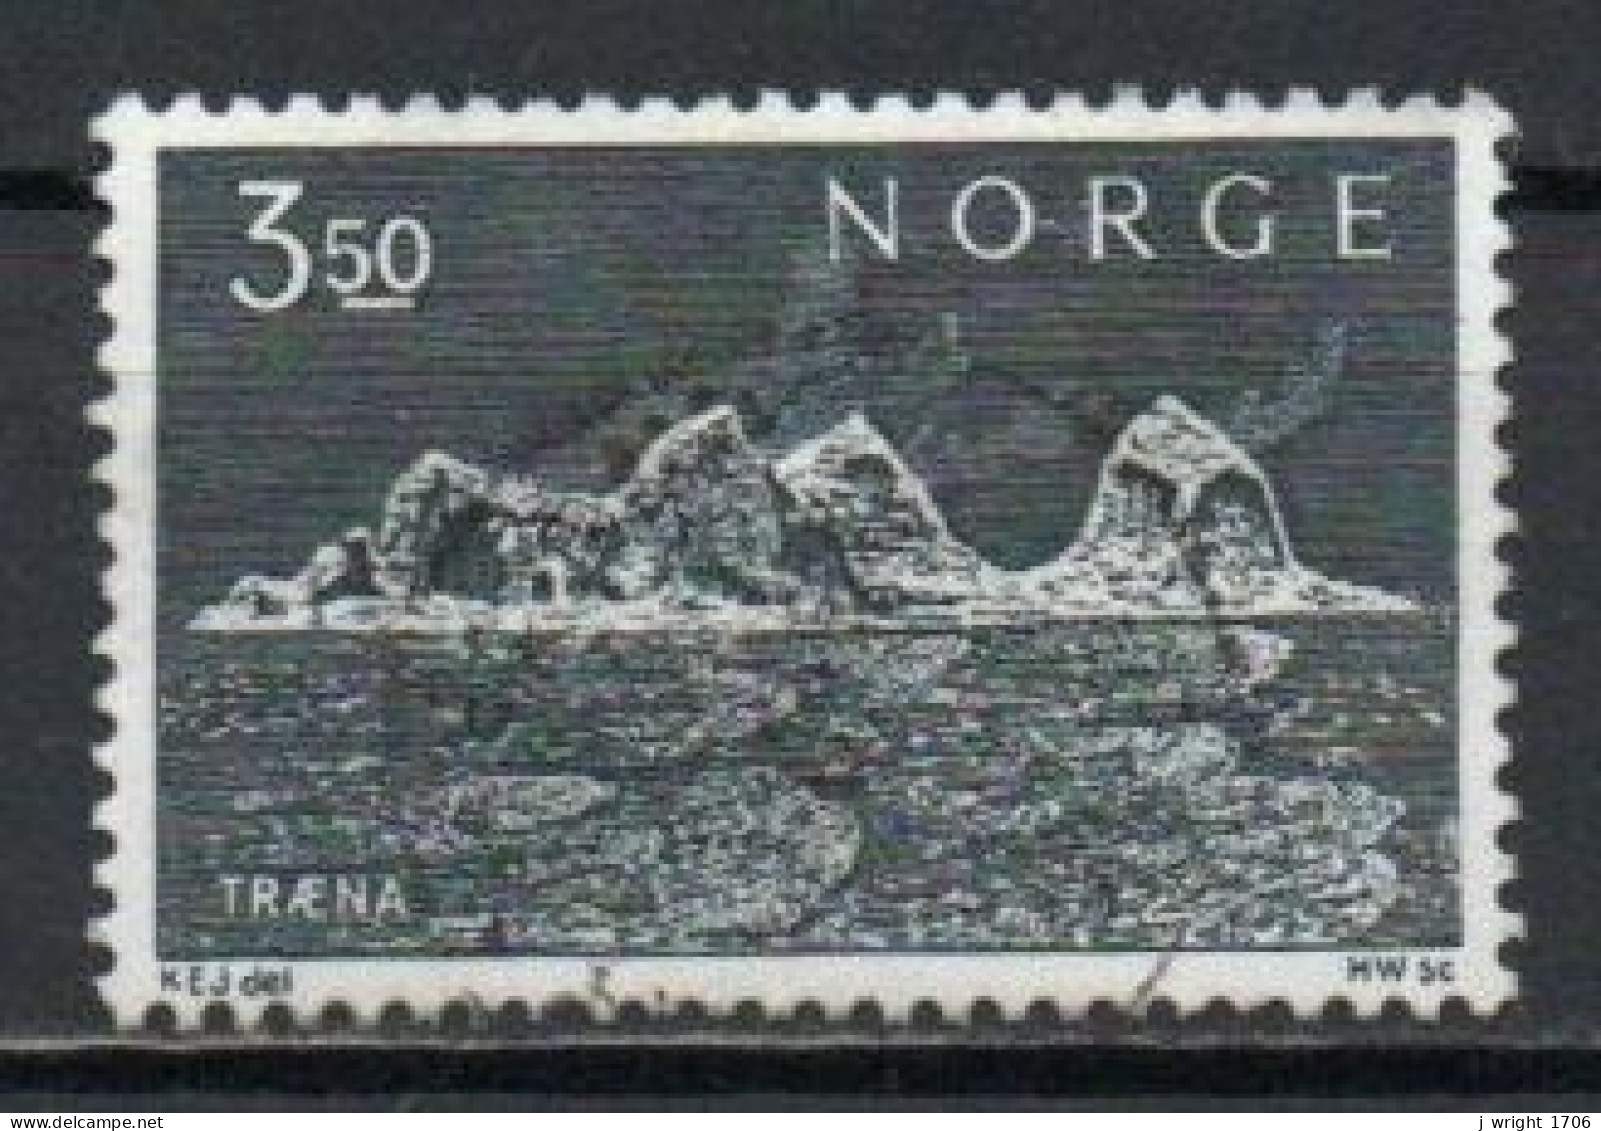 Norway, 1969, Traena Islands, Set, USED - Gebraucht